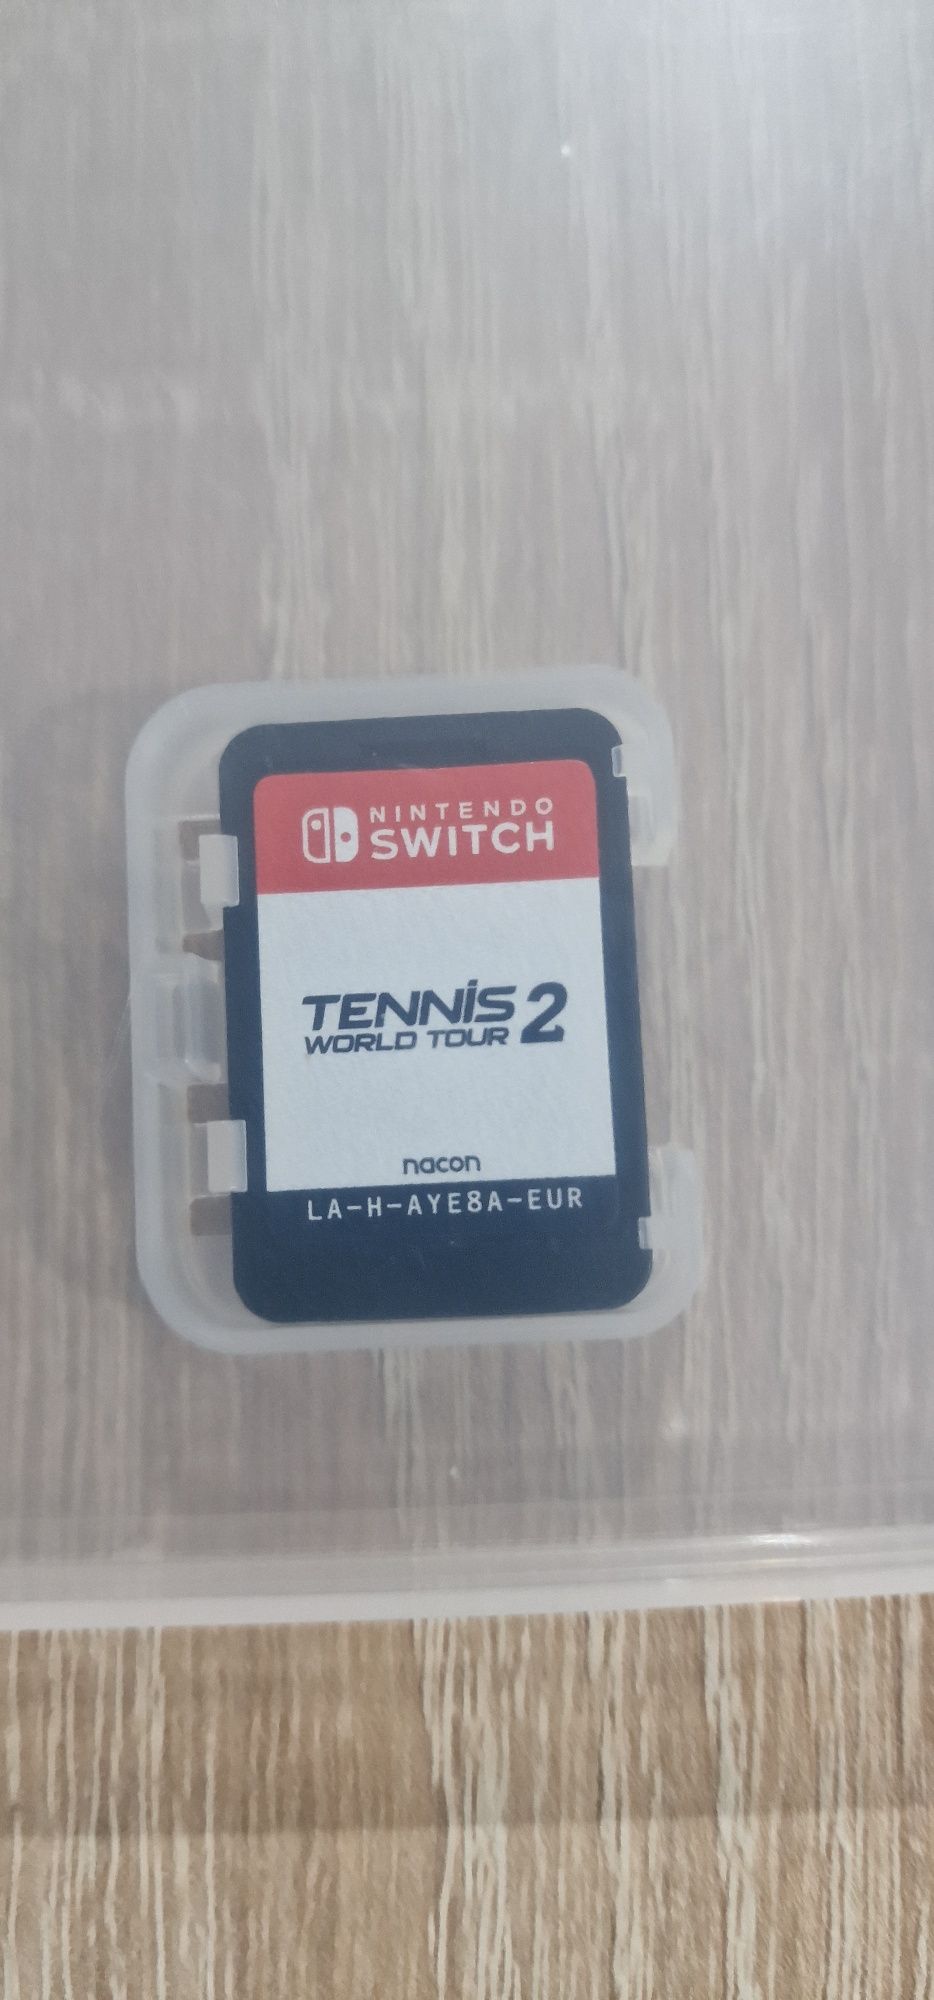 Tennis World Tour 2 Nintendo Switch.